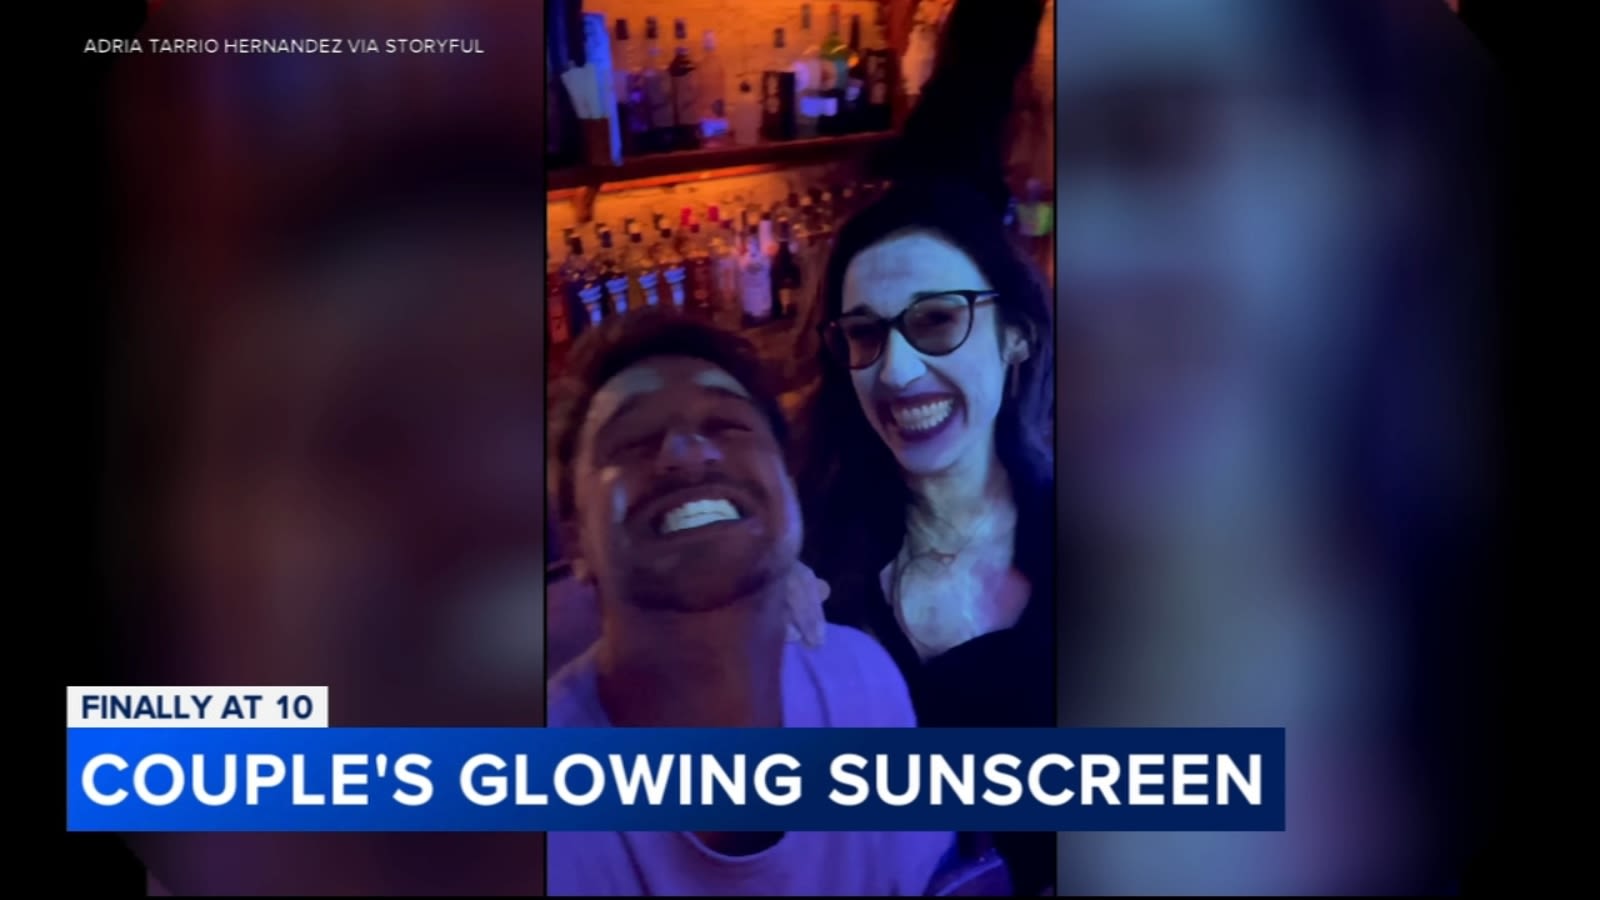 Couple's sunscreen hilariously glows under Barcelona nightclub's lighting